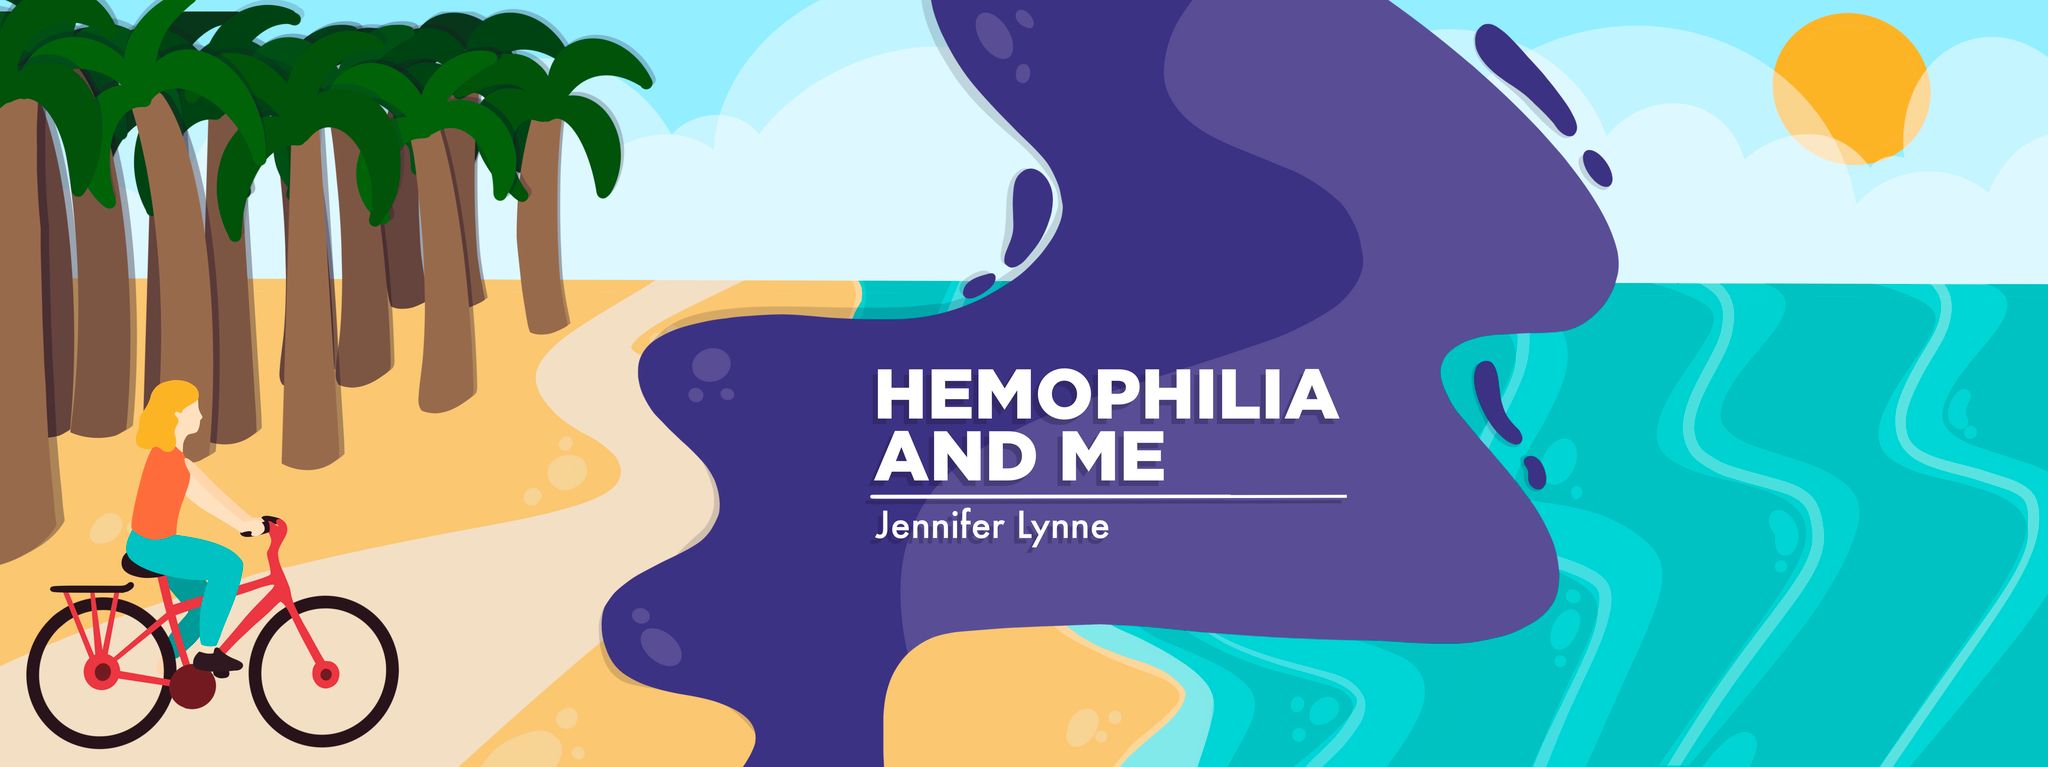 Hemophilia News Today | banner image for 